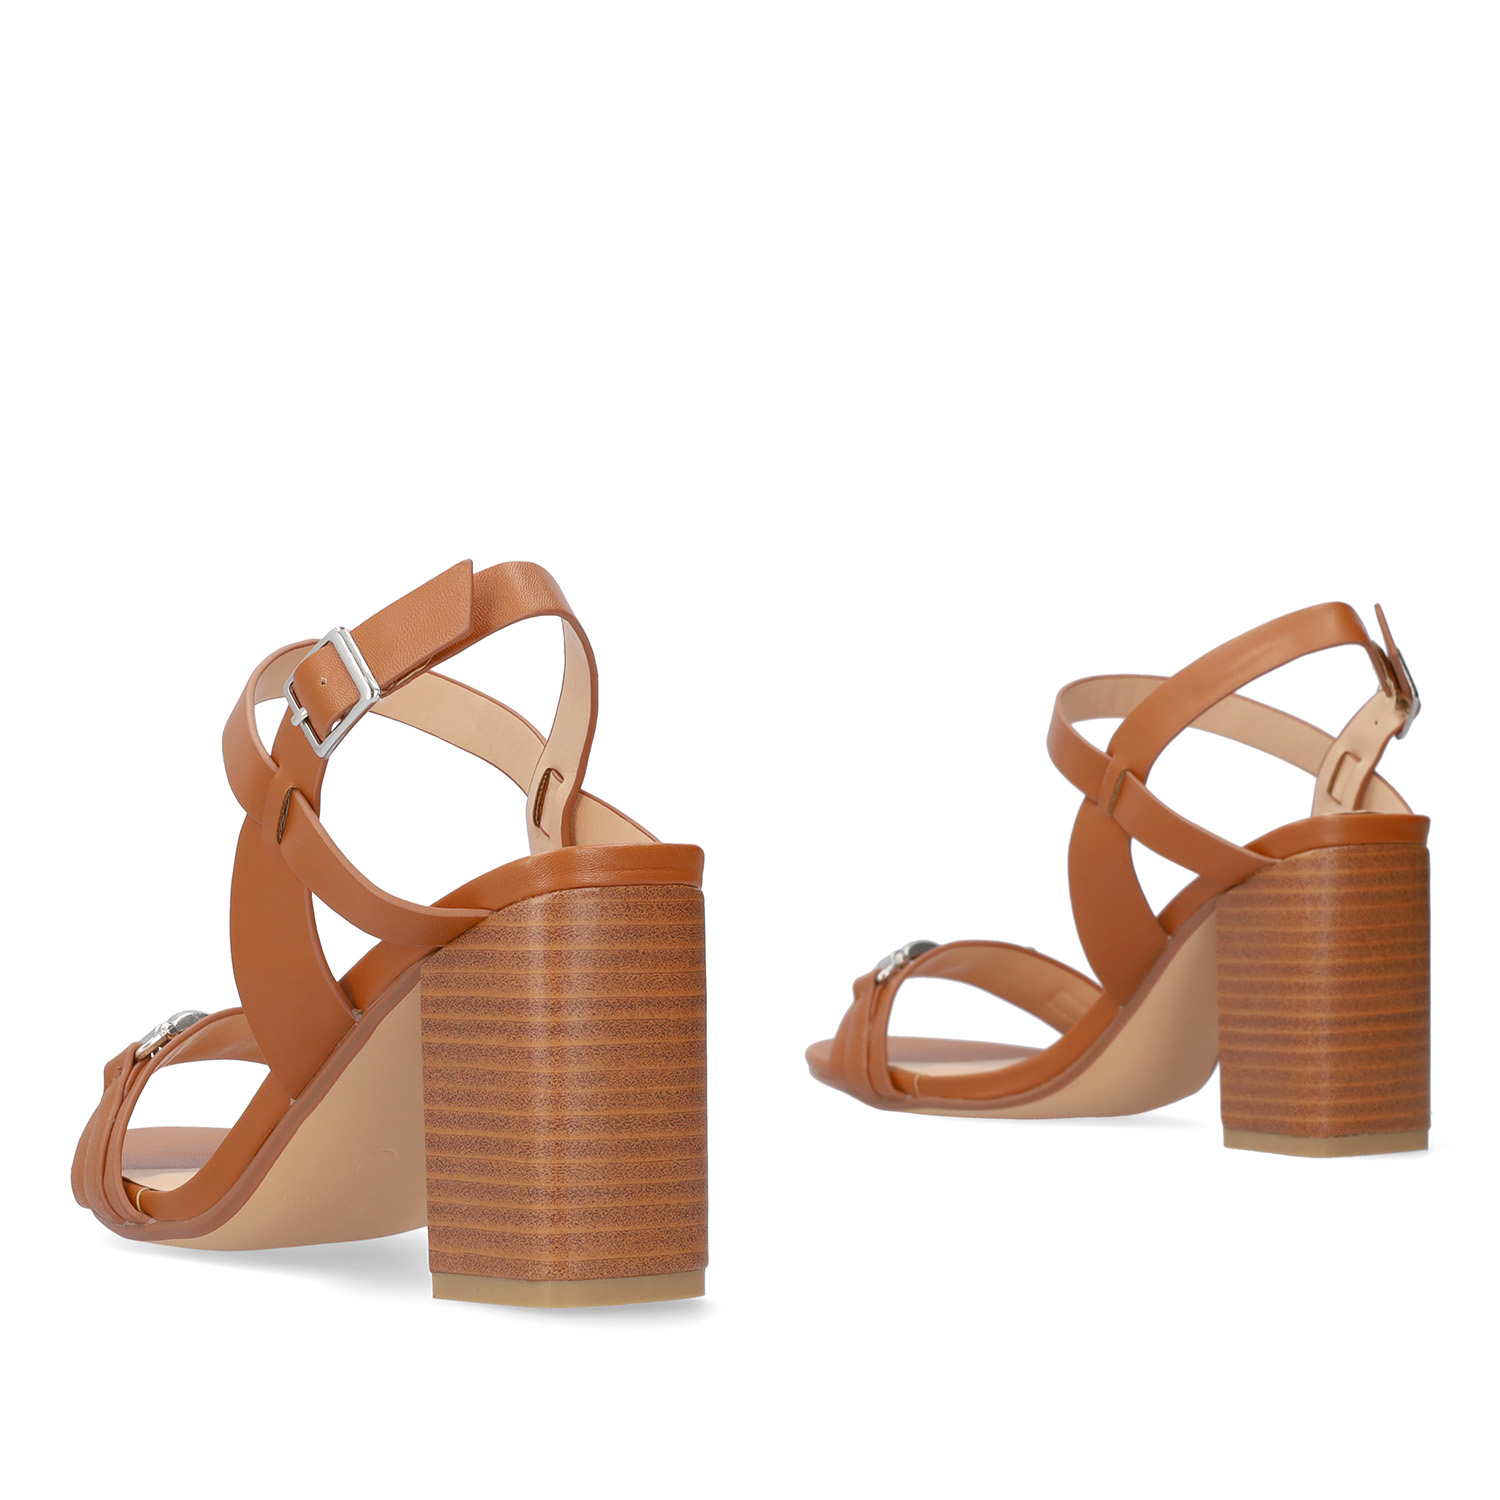 Squared heel sandal in soft brown 